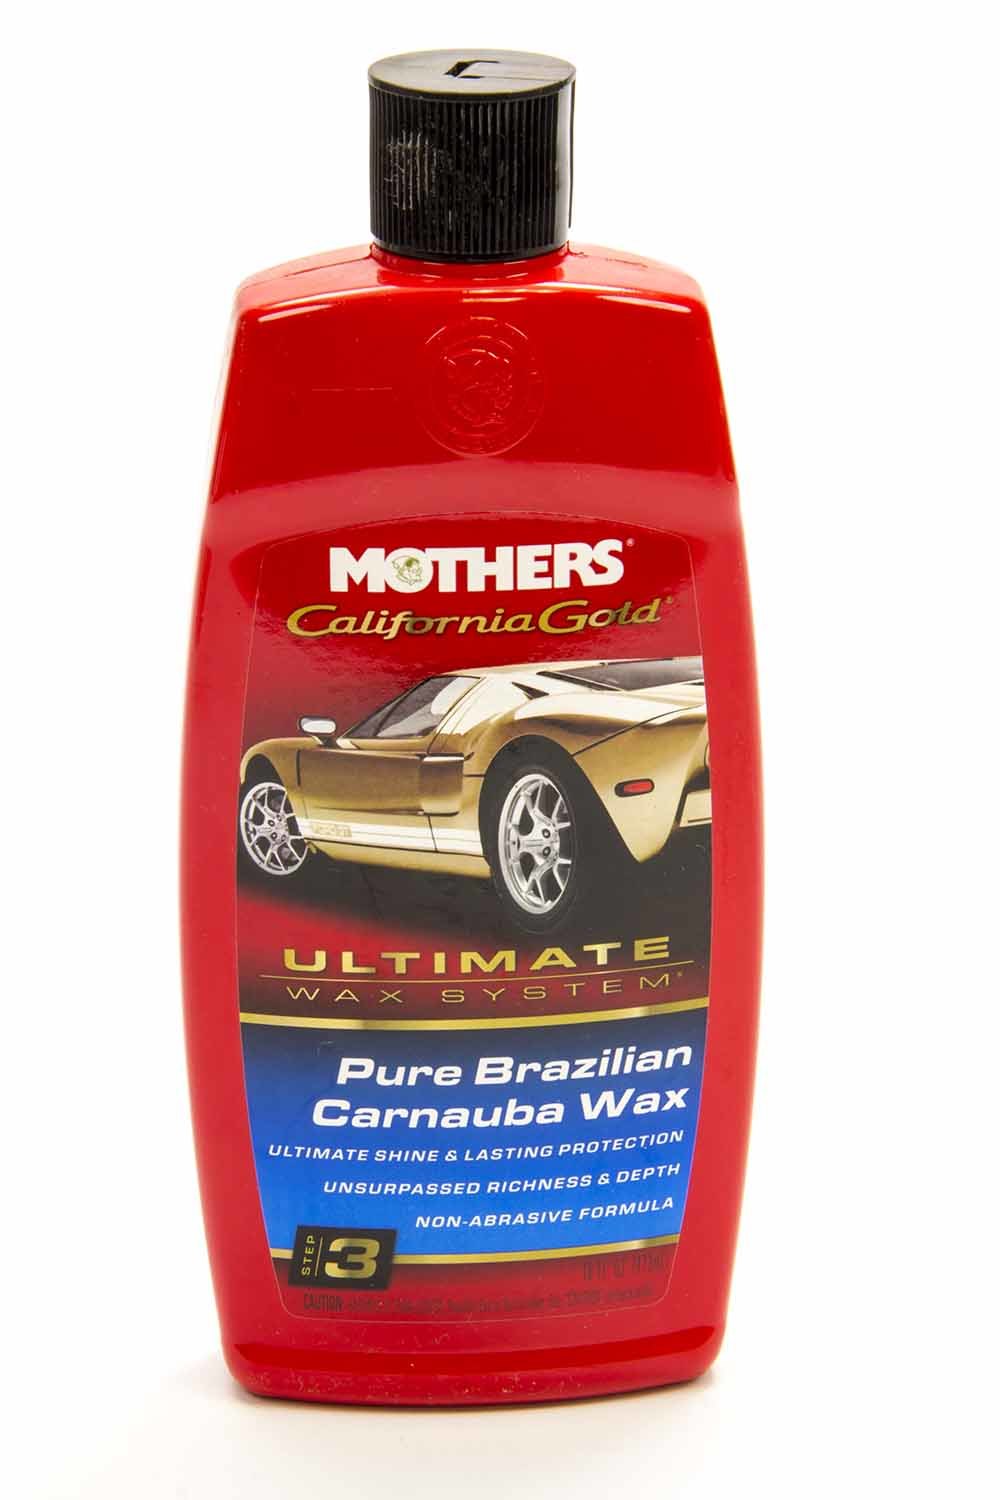 MOTHERS Cream Wax, California Gold Pure Brazilian Carnauba, 16.00 oz Bottle, Each